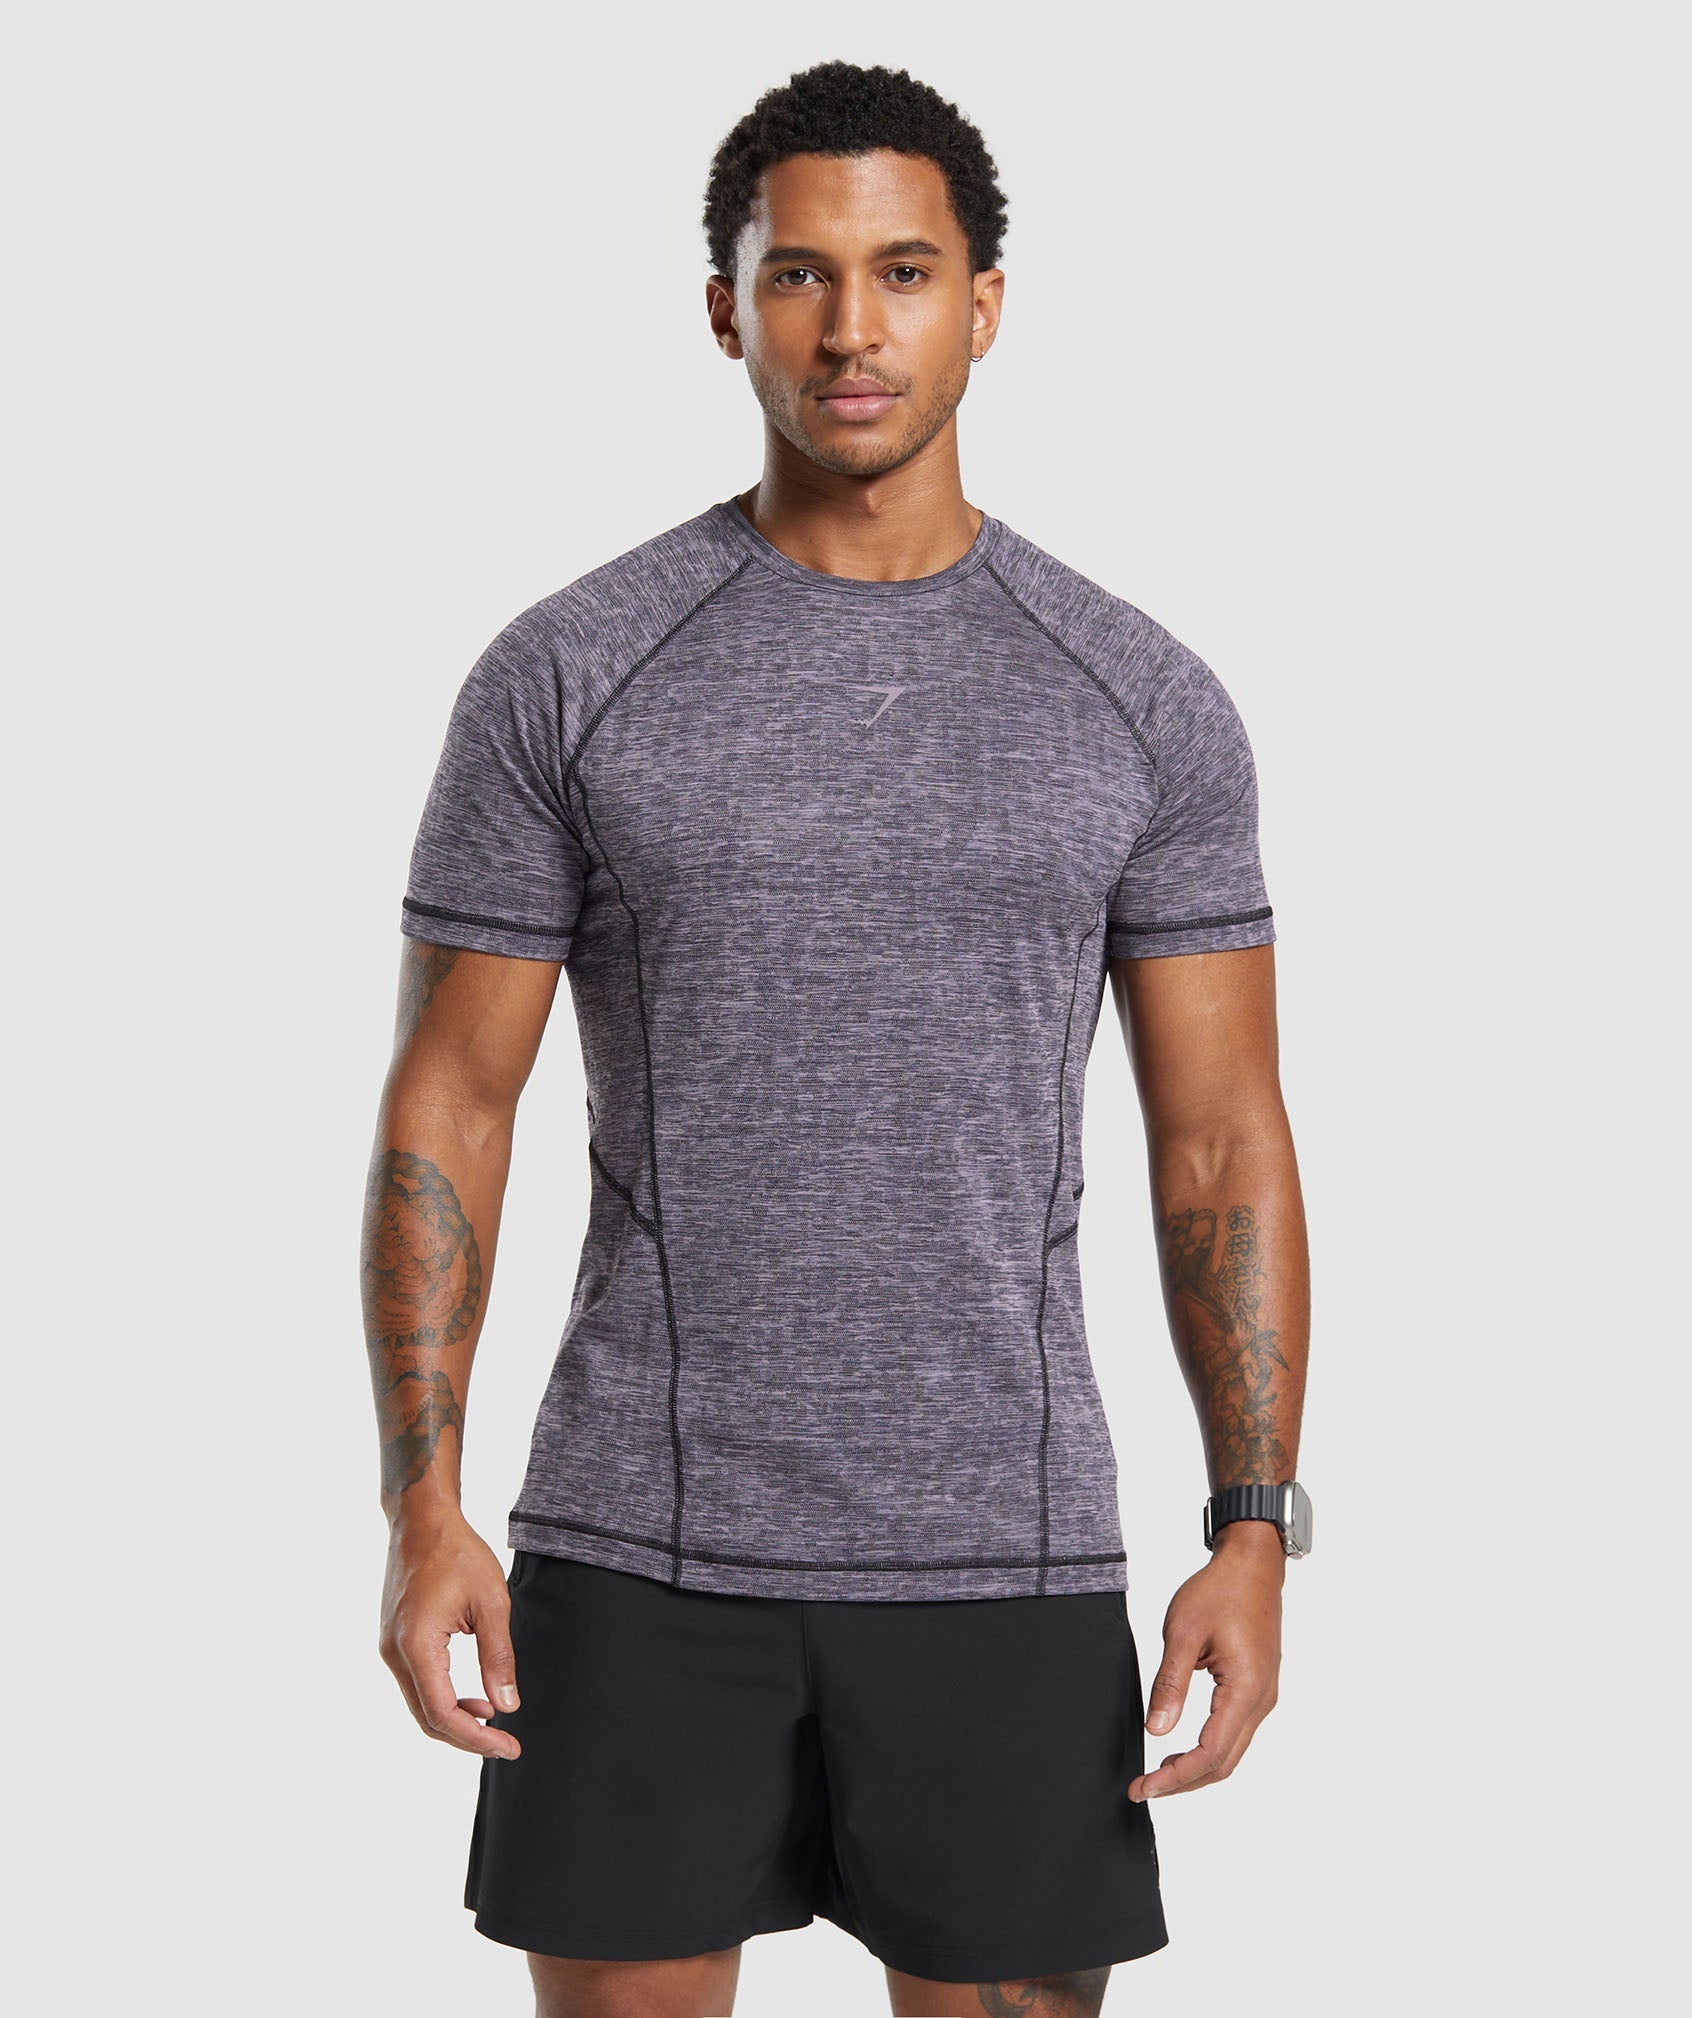 Apex T-Shirt in Fog Purple/Black - view 1